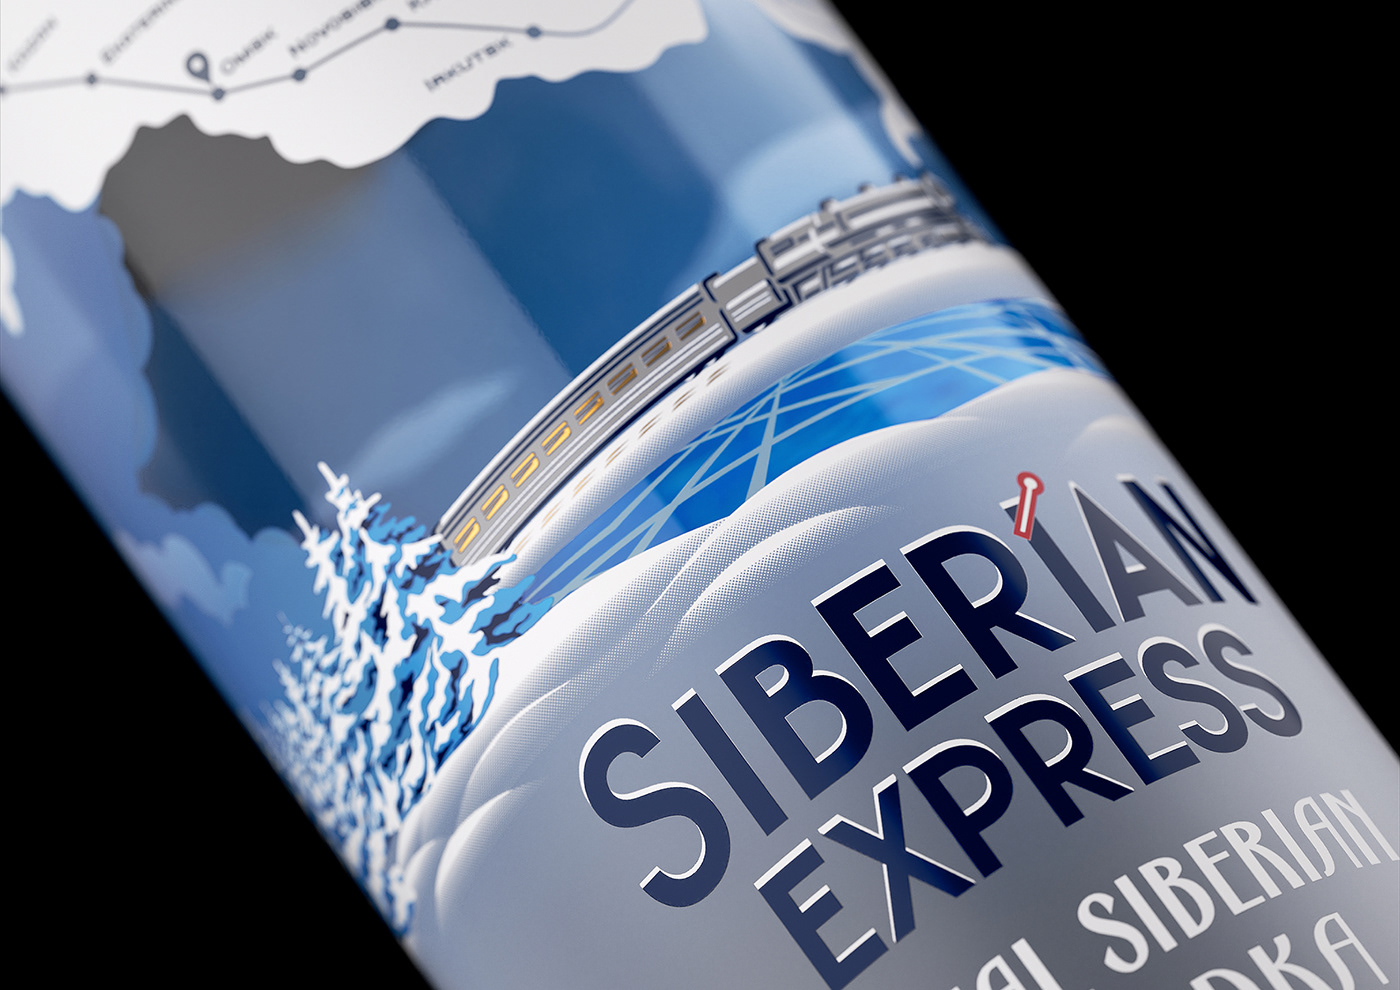 ASG express Siberia siberian Vodka АСГ водка сибирский Сибирь экспресс